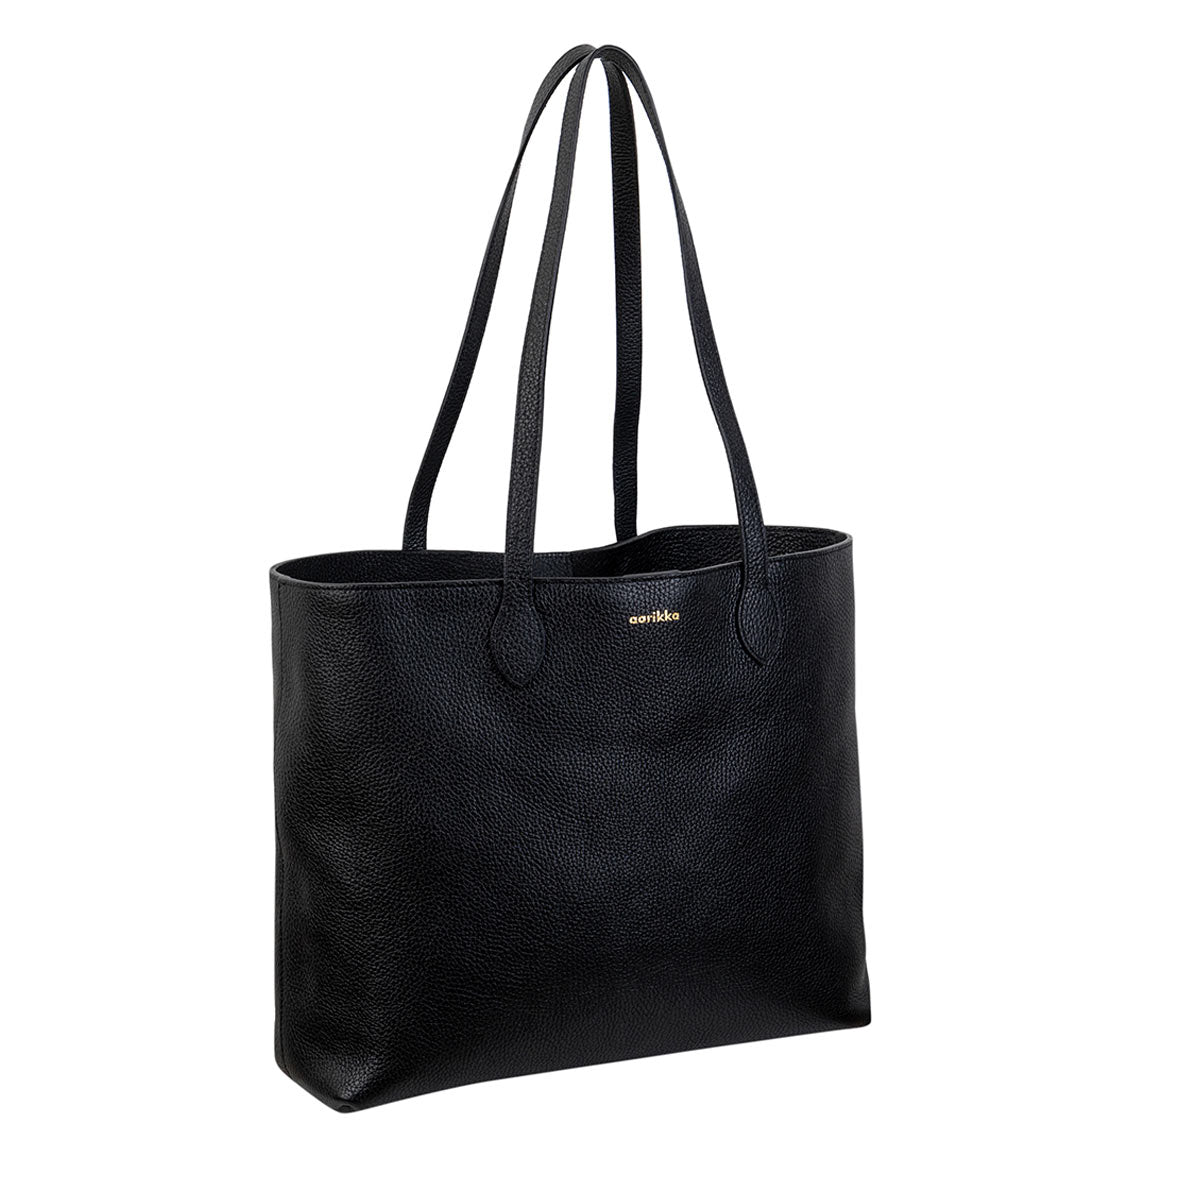 Rosa shopper bag, black